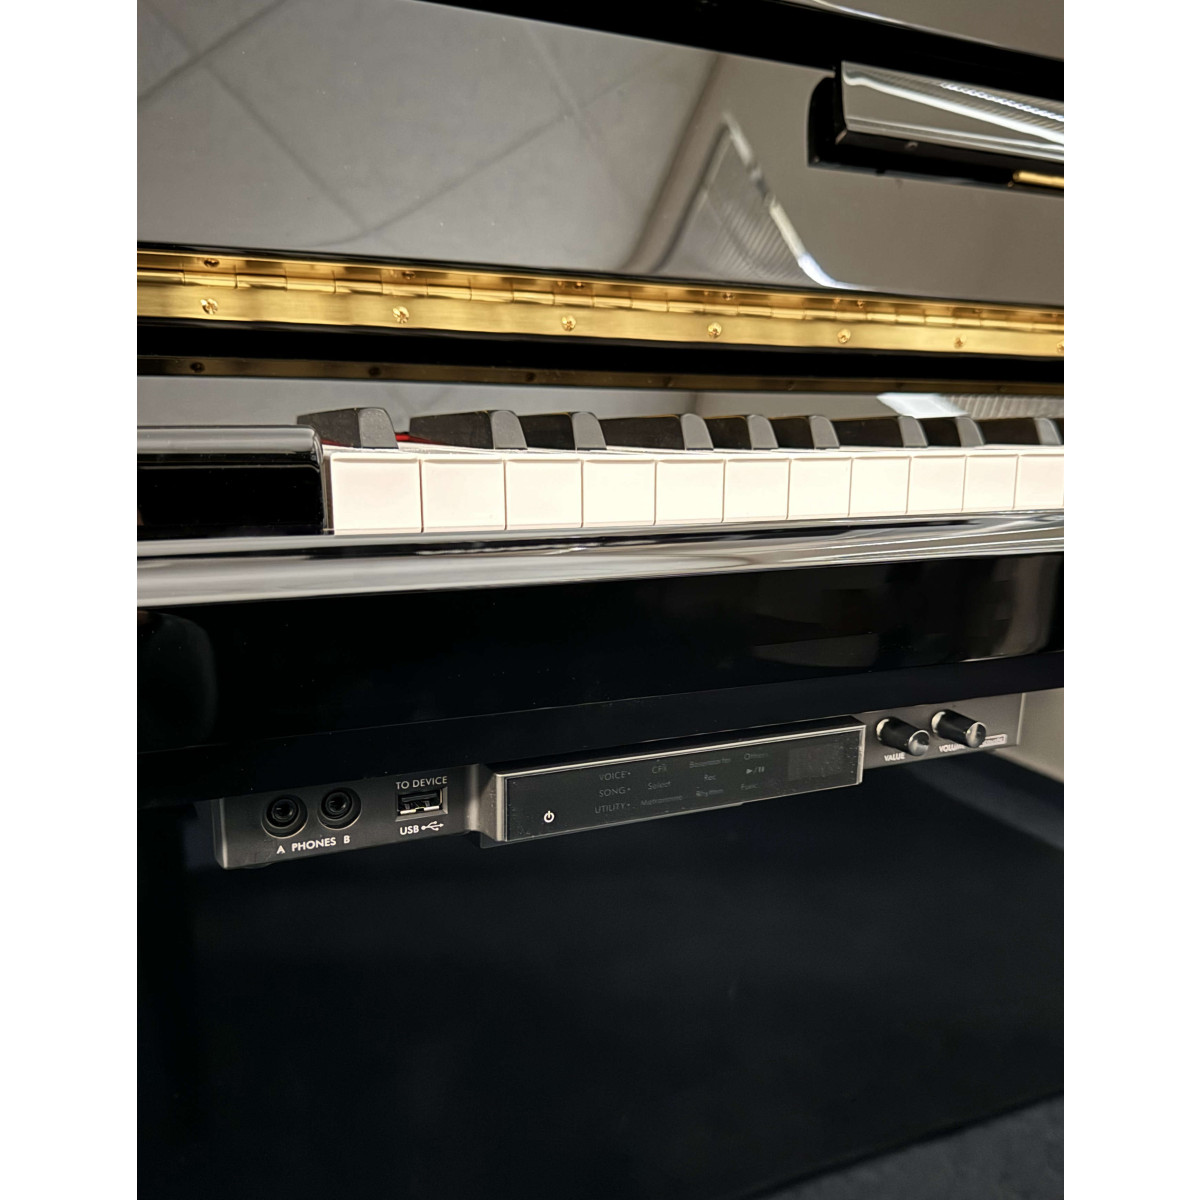 Yamaha B1 TC3 Silent Piano zur Miete bei Pianelli, Ansicht: Silent System